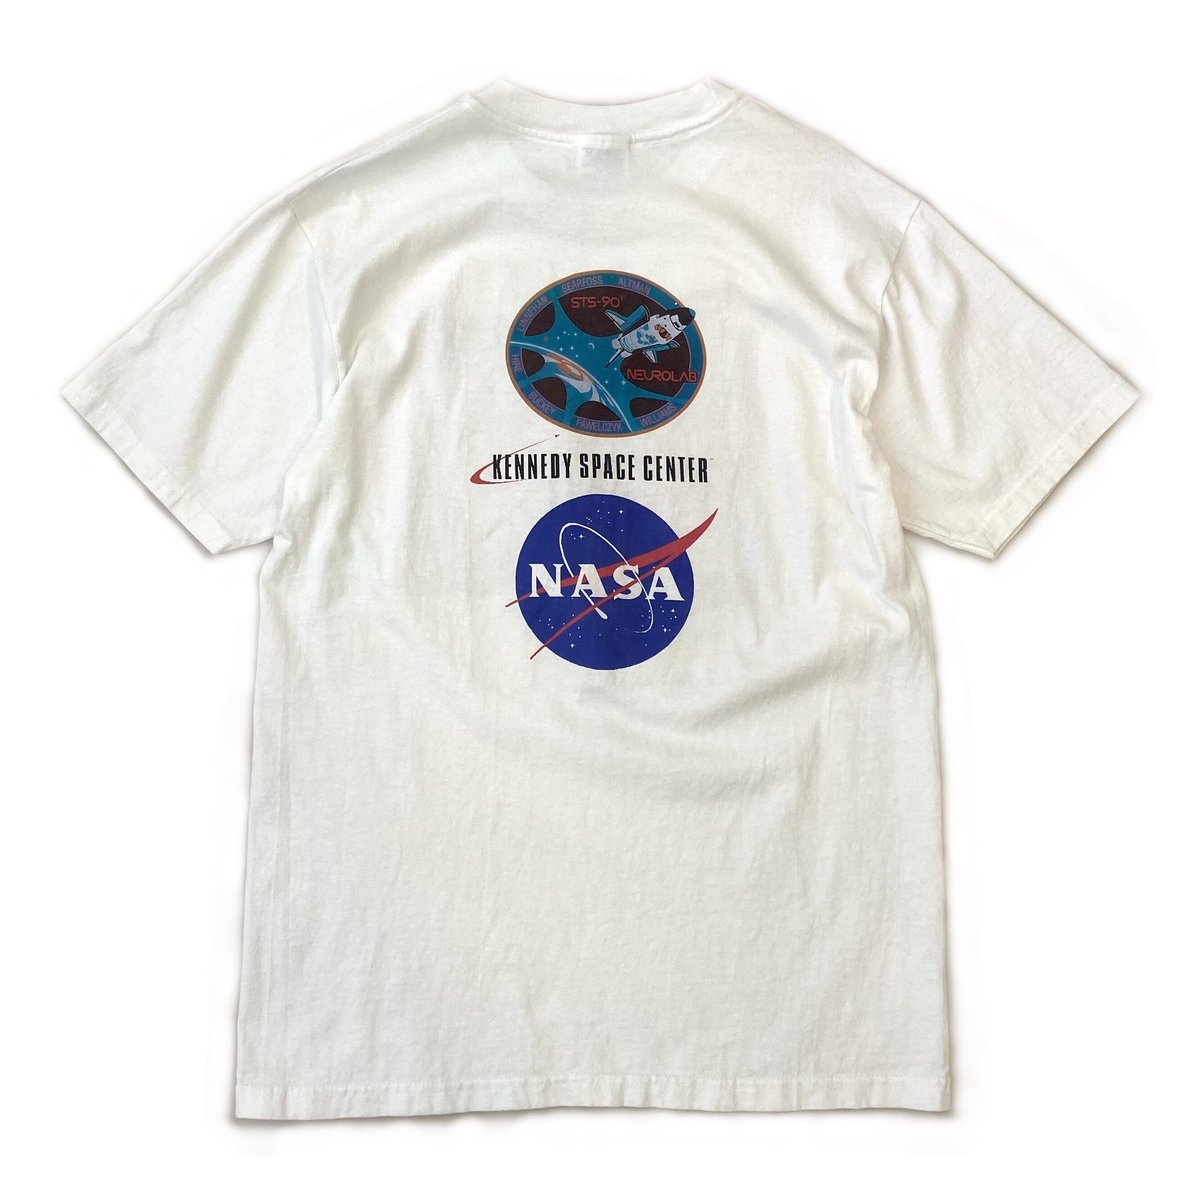 90's NASA / Kennedy Space Center T-shirt